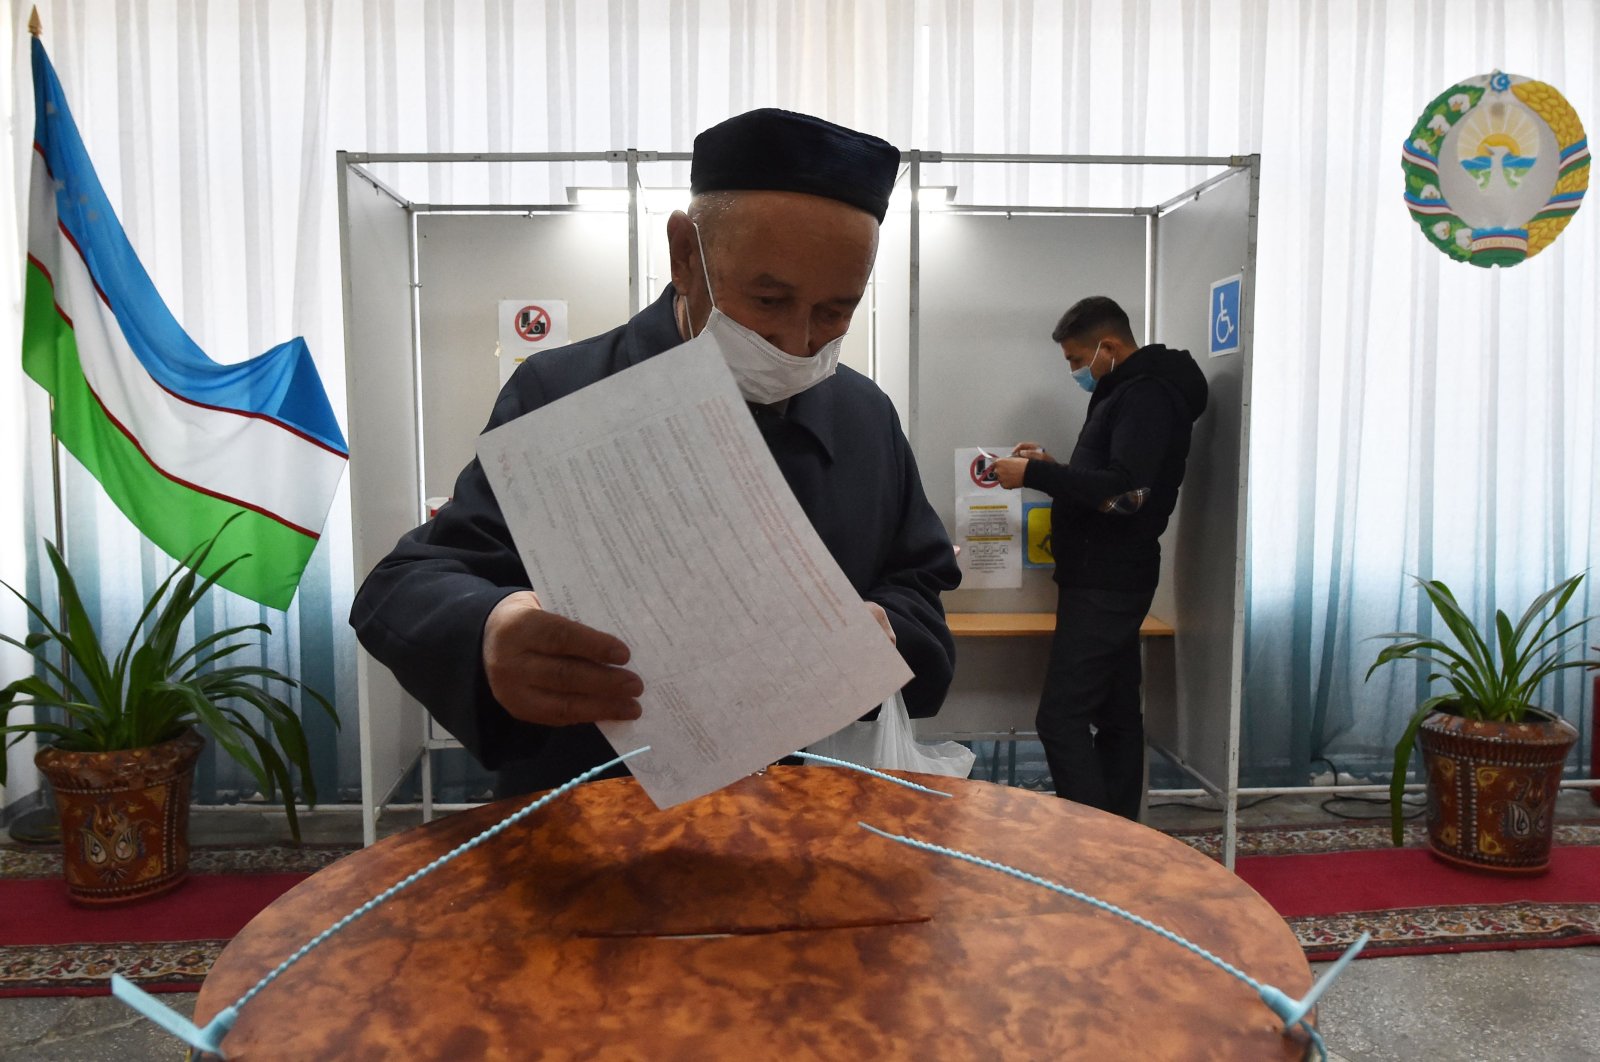 A man casts his ballot during Uzbekistan's presidential election at a polling station in Tashkent, Uzbekistan, Oct. 24, 2021. (AFP Photo)